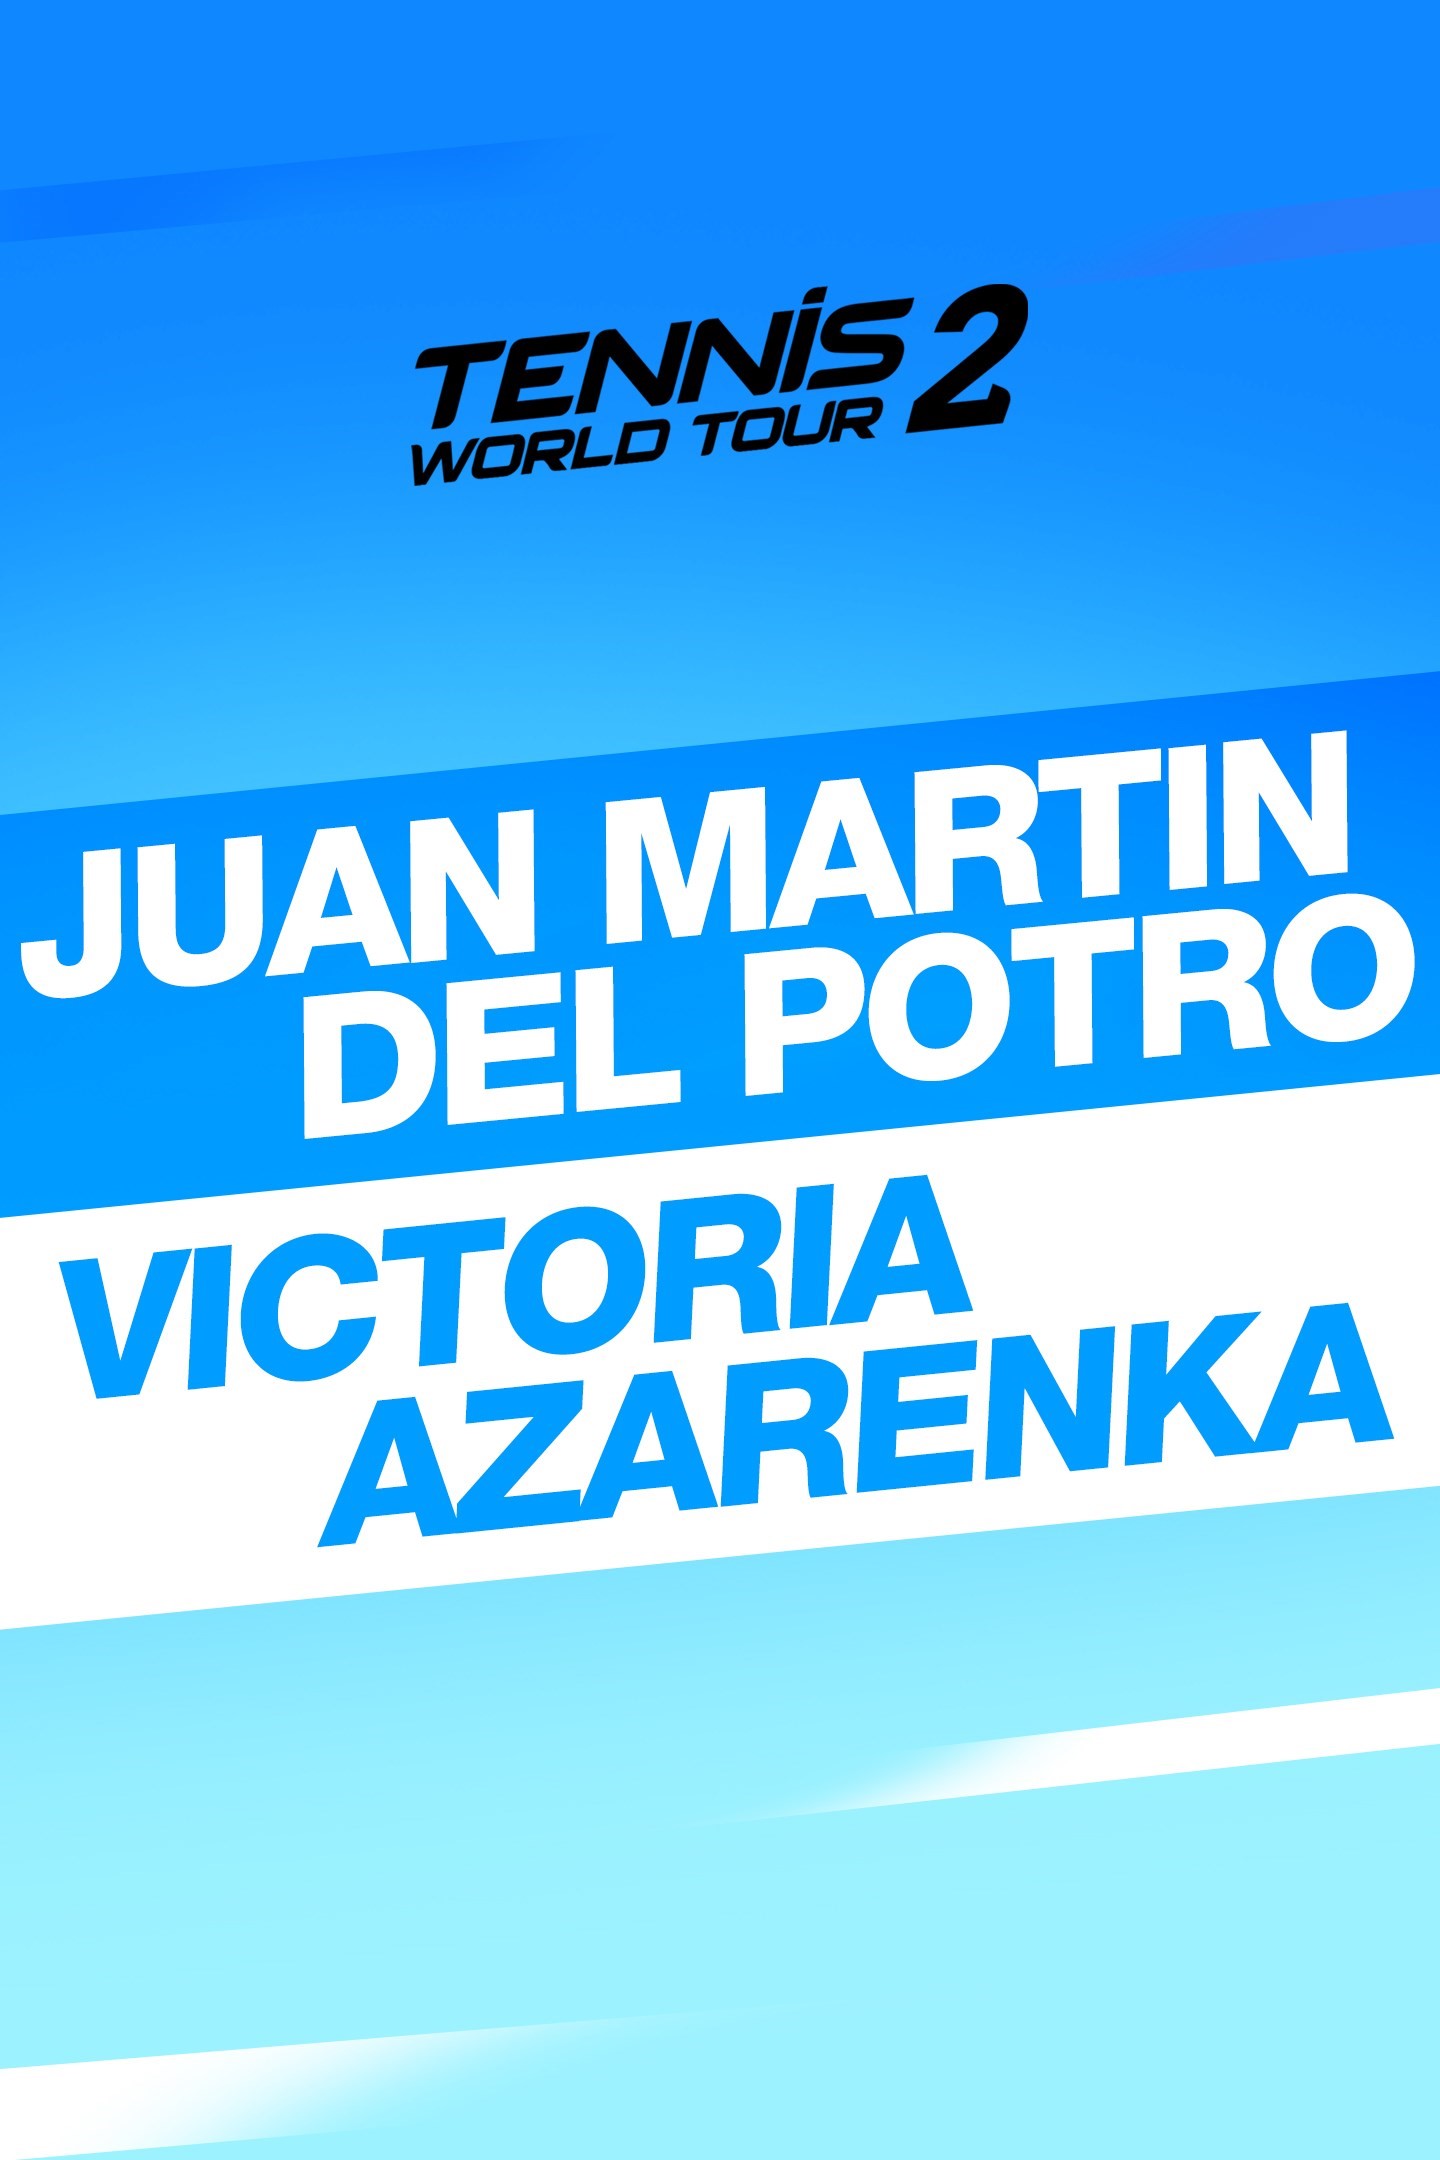 Tennis World Tour 2 - Juan Martin Del Potro & Victoria Azarenka